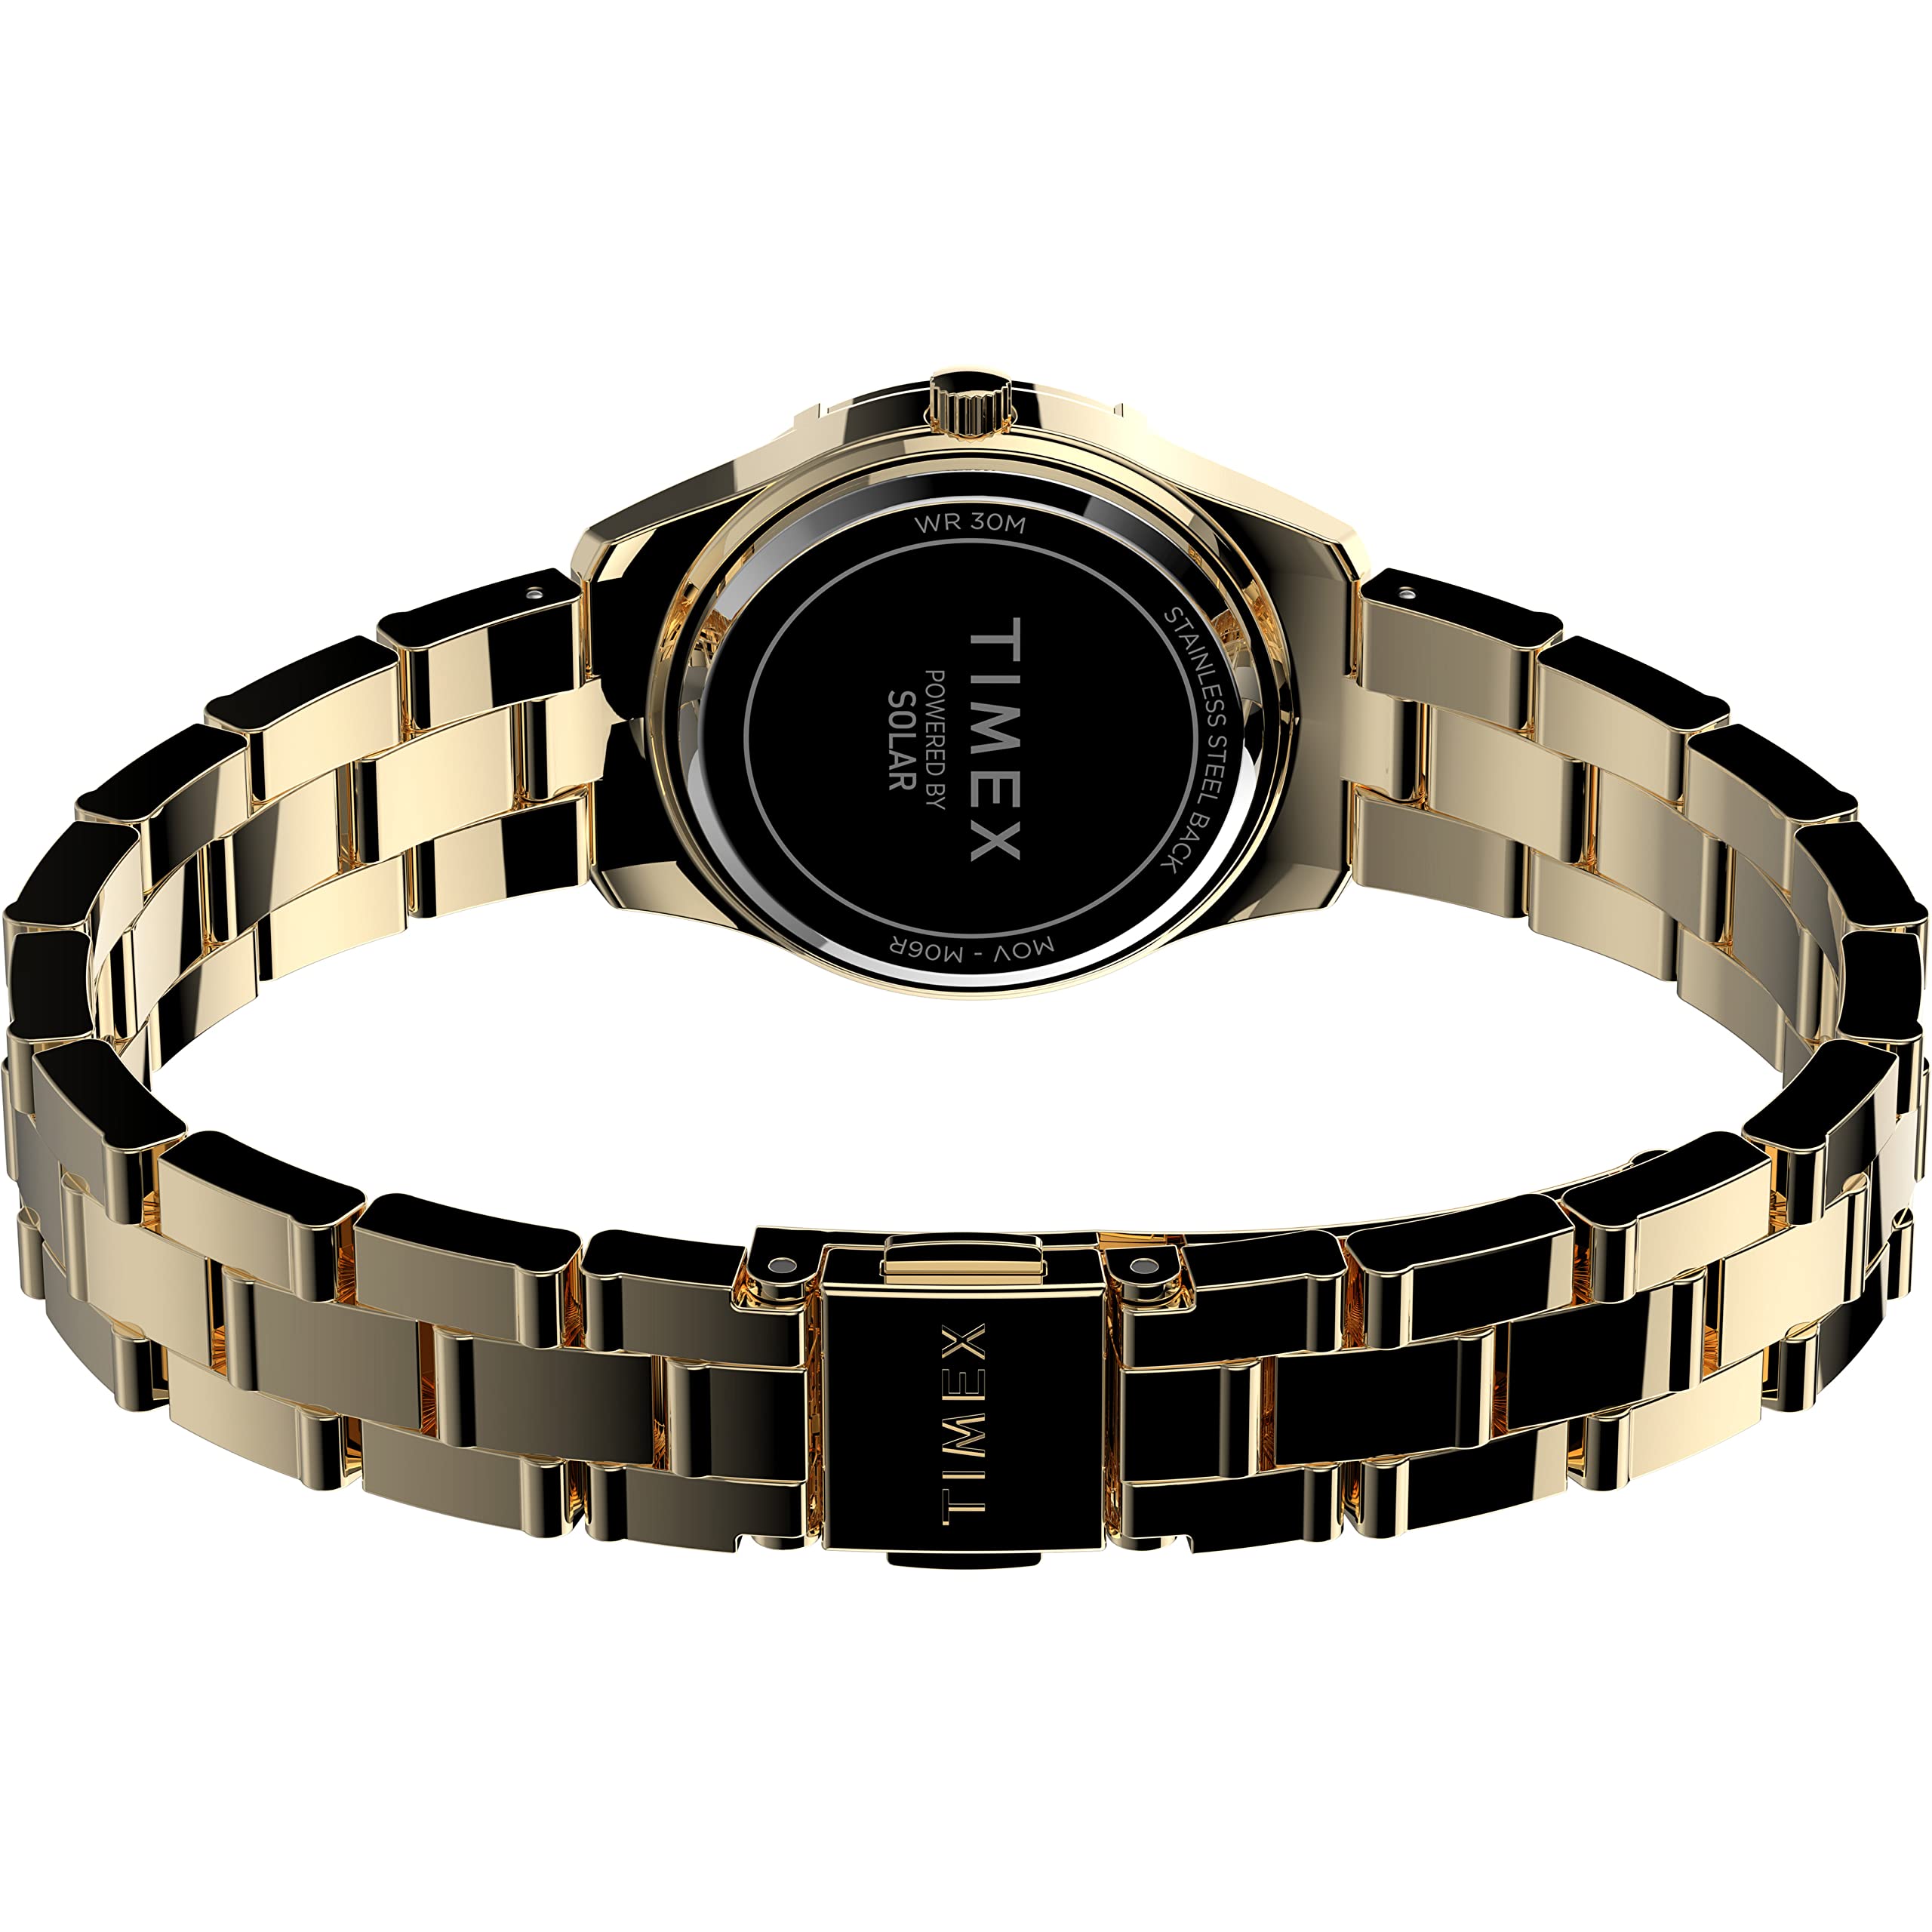 Timex Women's Solar Premium Dress 28mm Watch